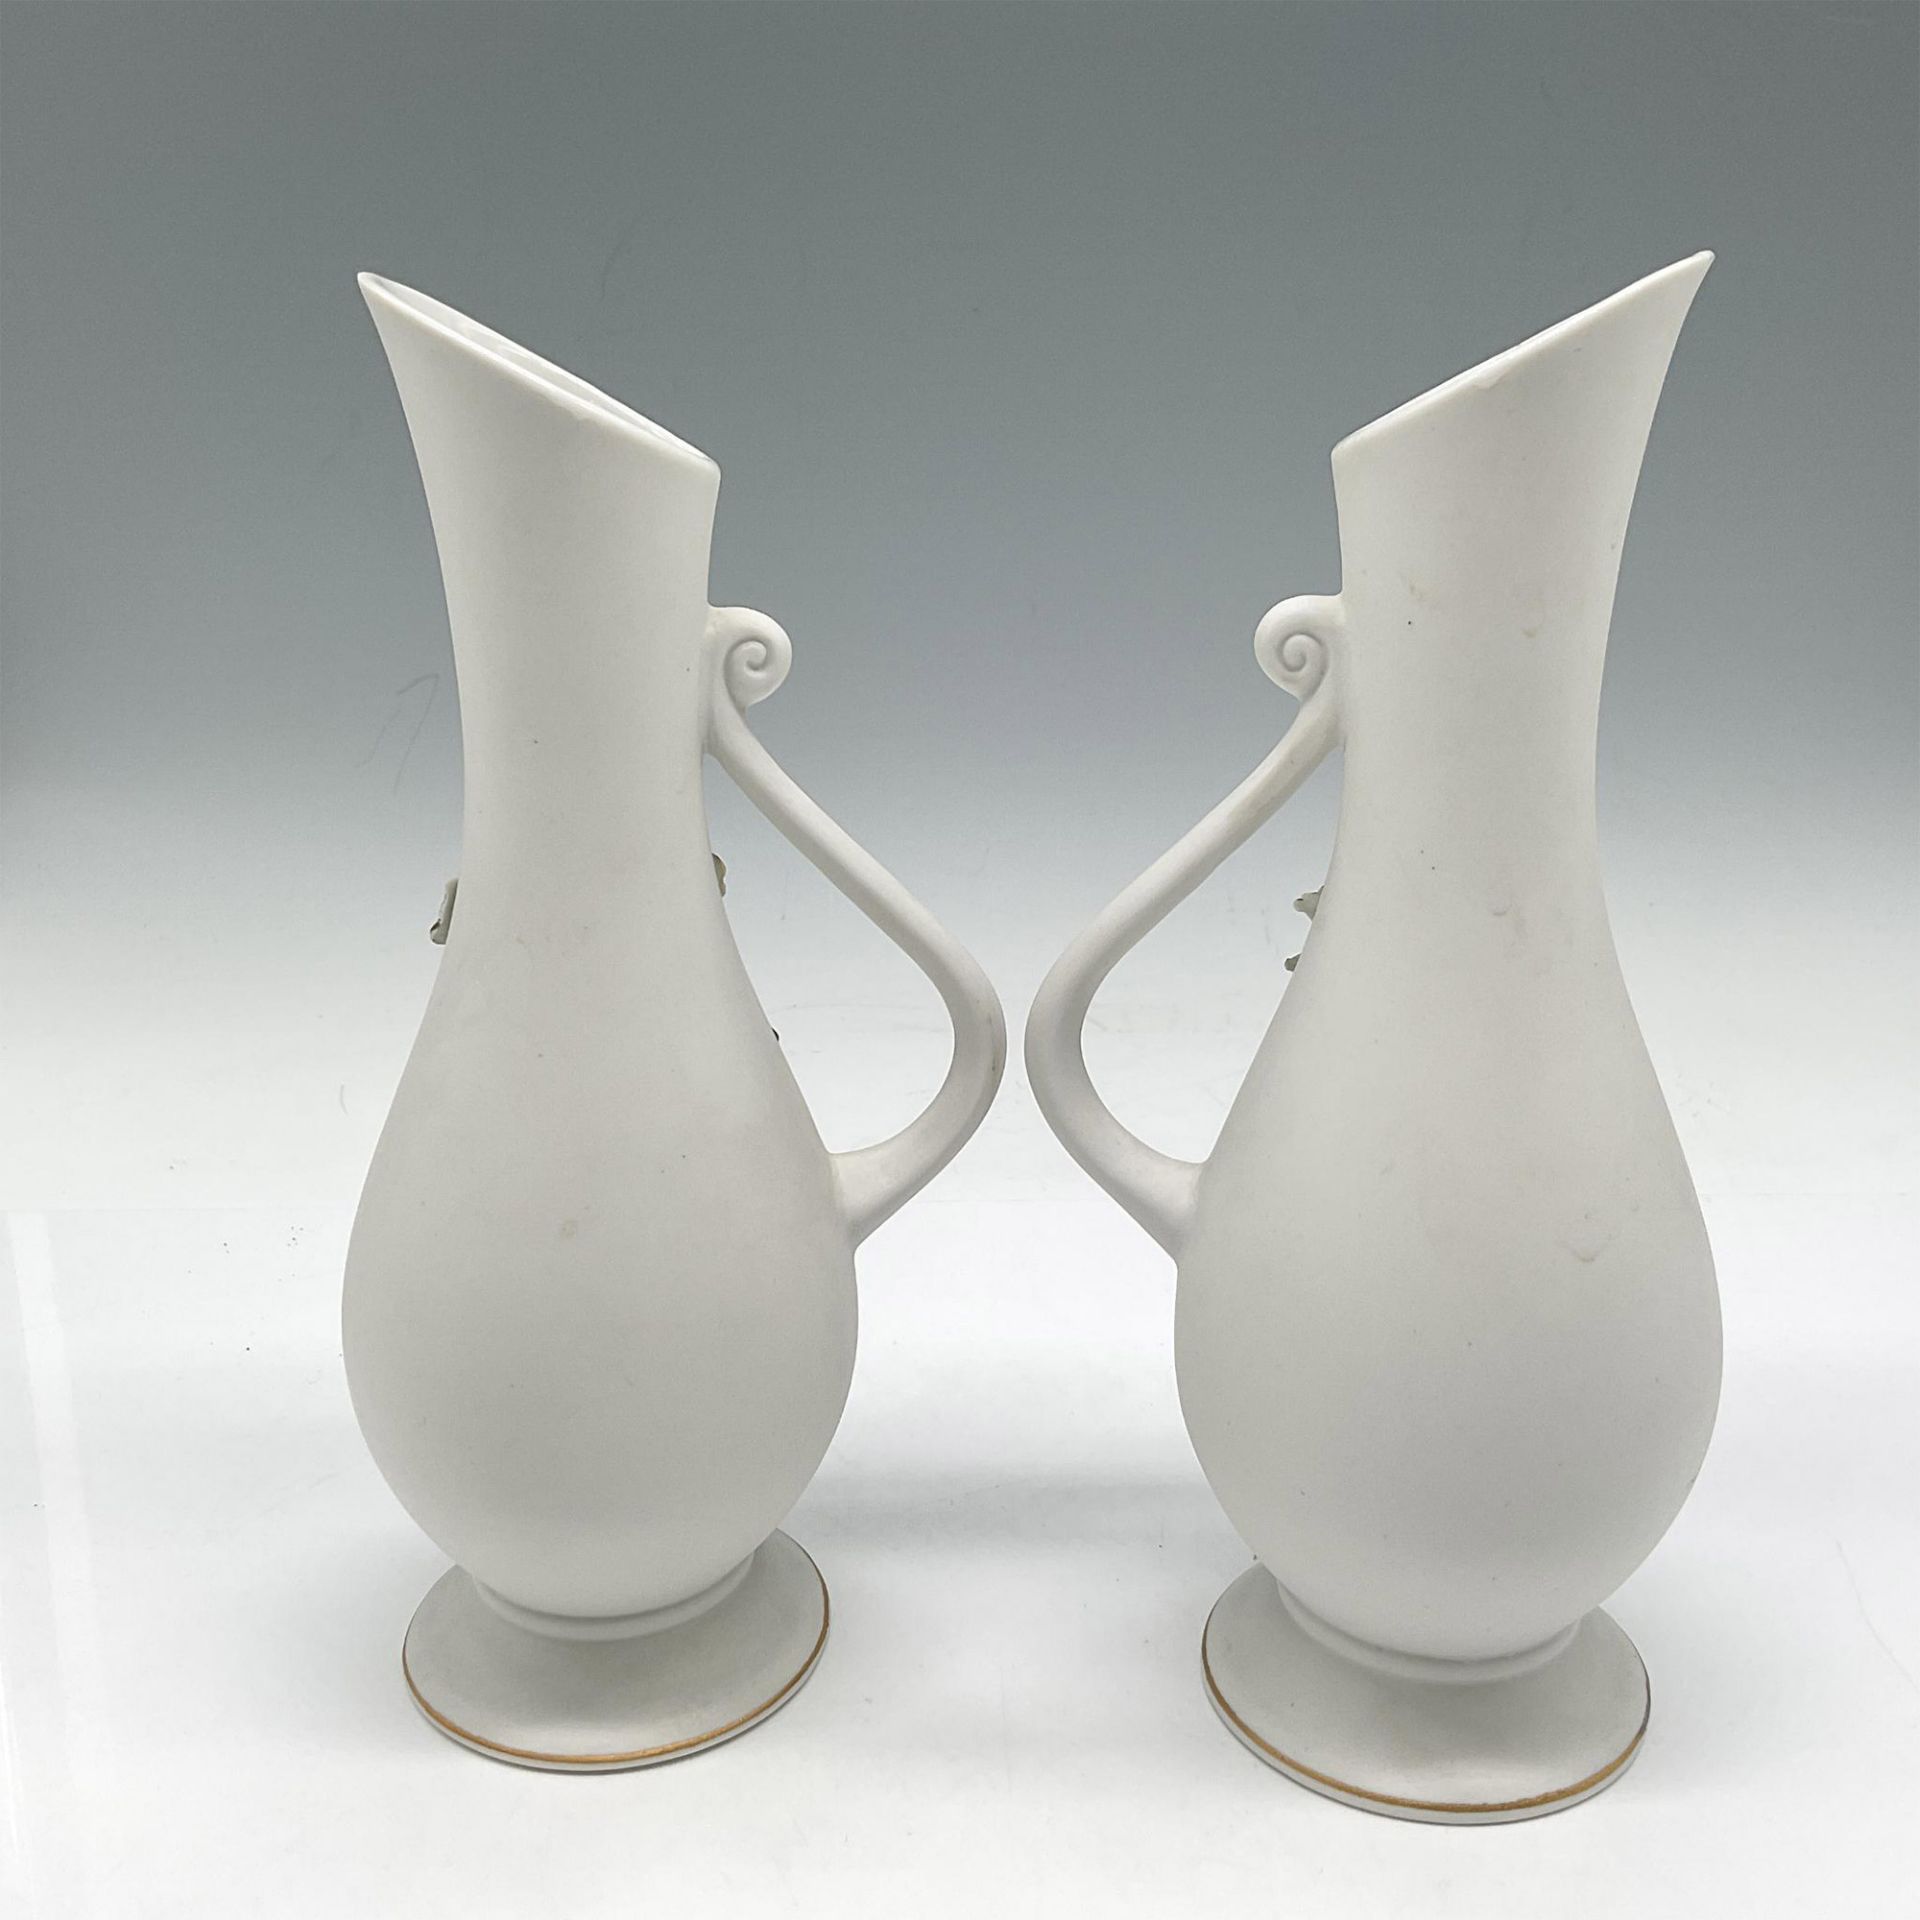 Pair of Vintage Lefton China Vases - Image 2 of 3